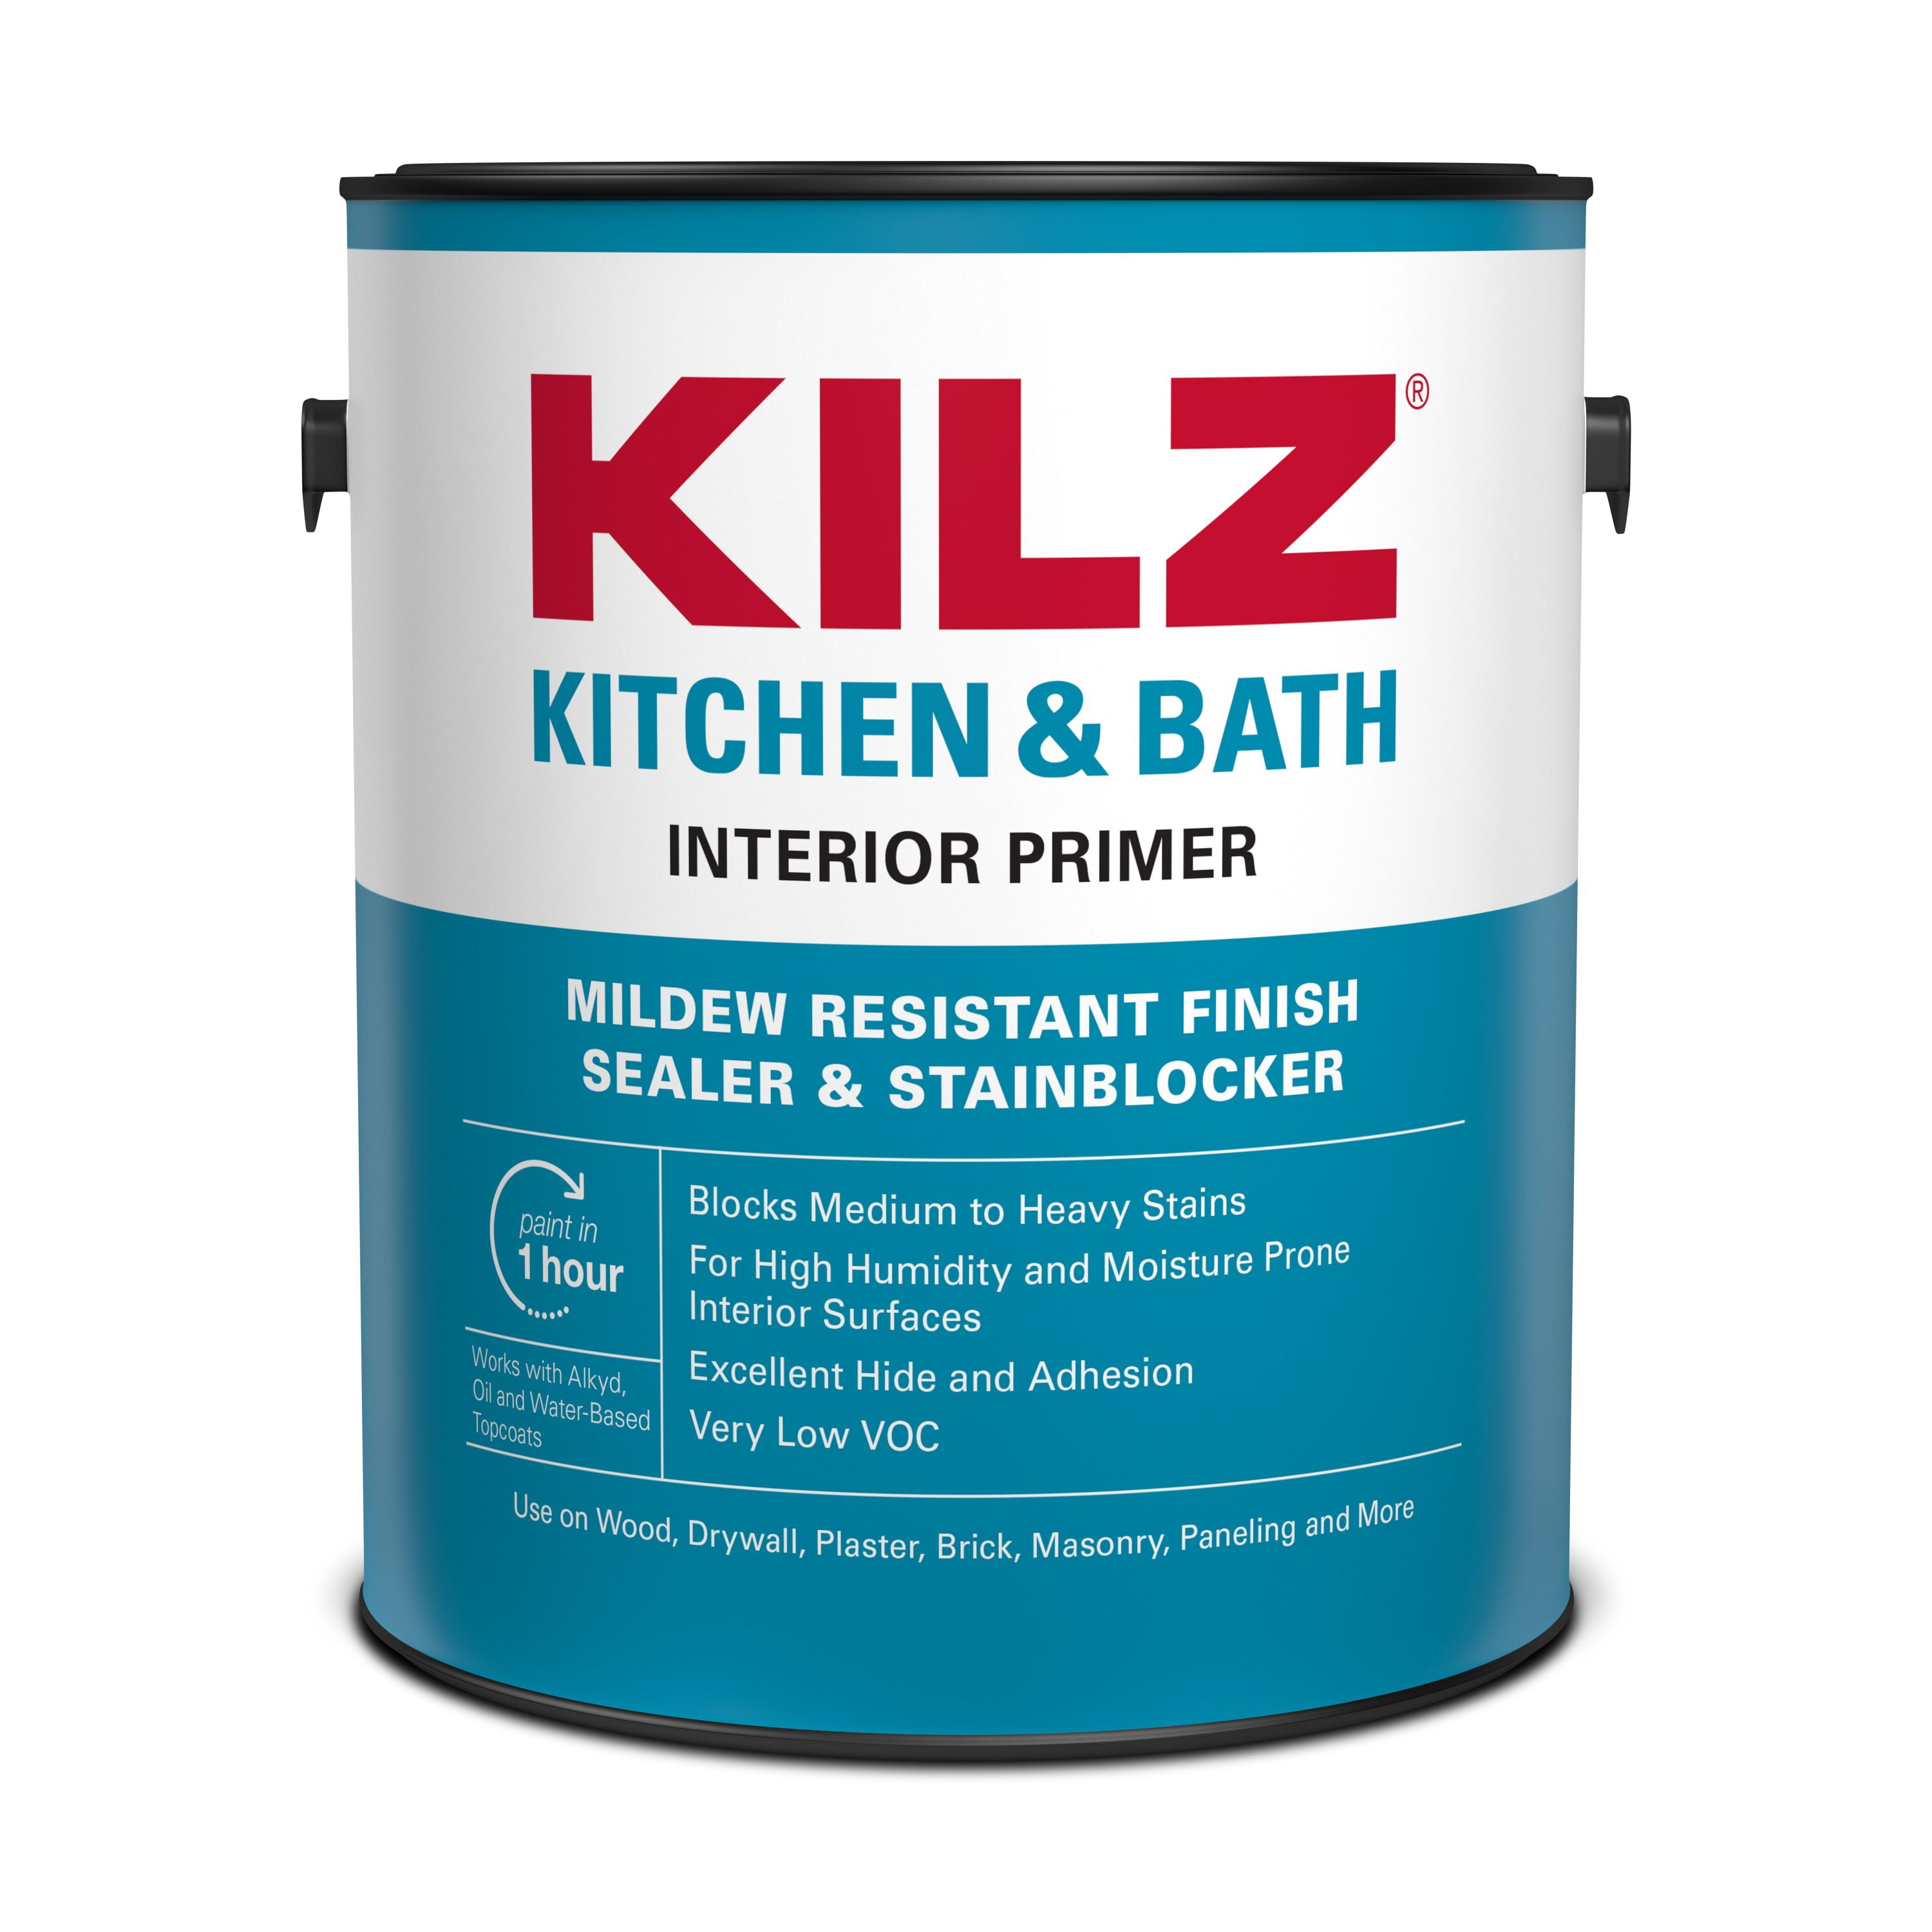 KILZ Kitchen & Bath Latex Mildew-Resistant Primer, Interior, 1 Gallon